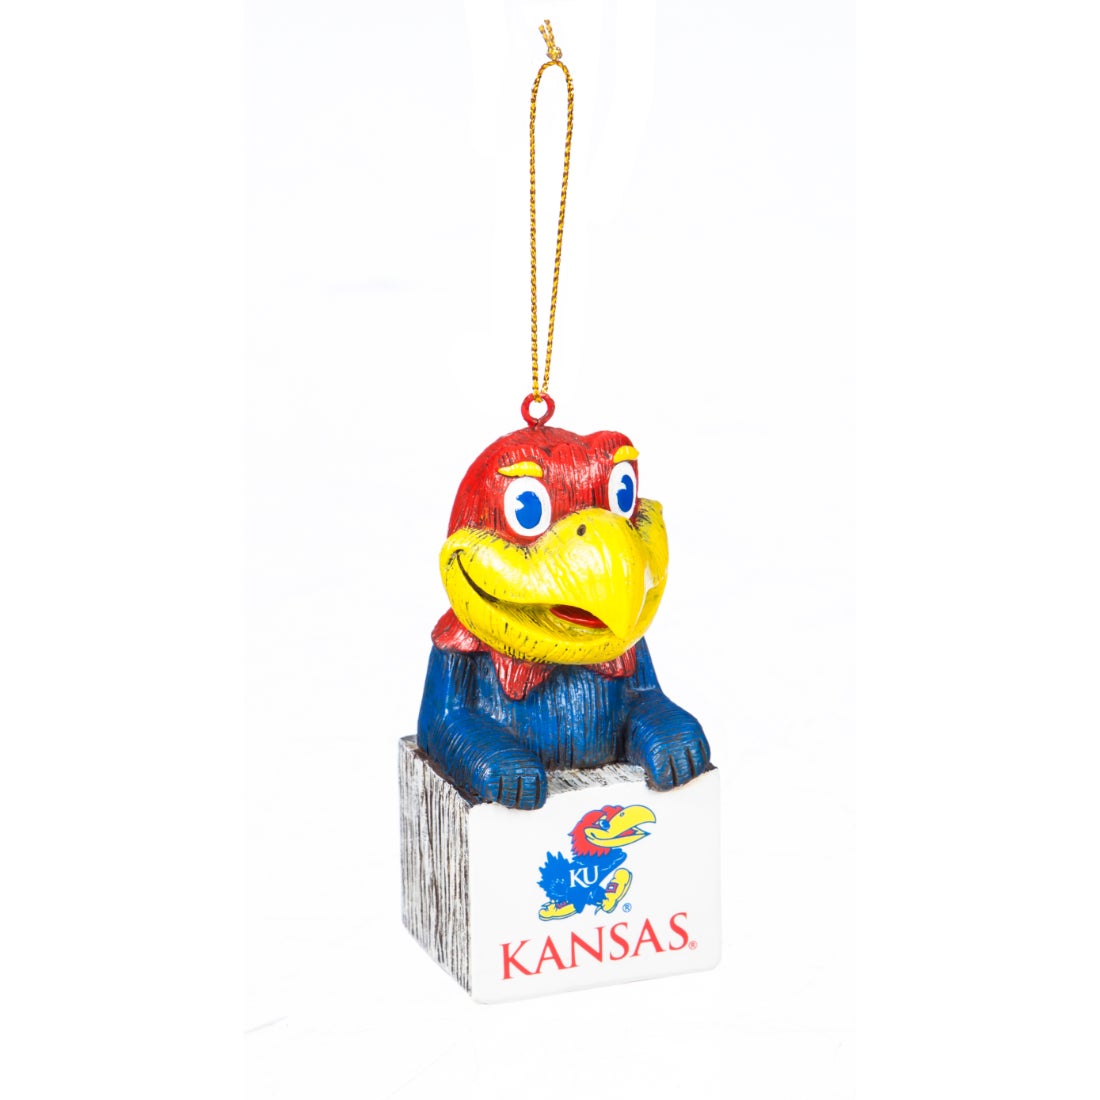 University of Kansas Mascot Ornament